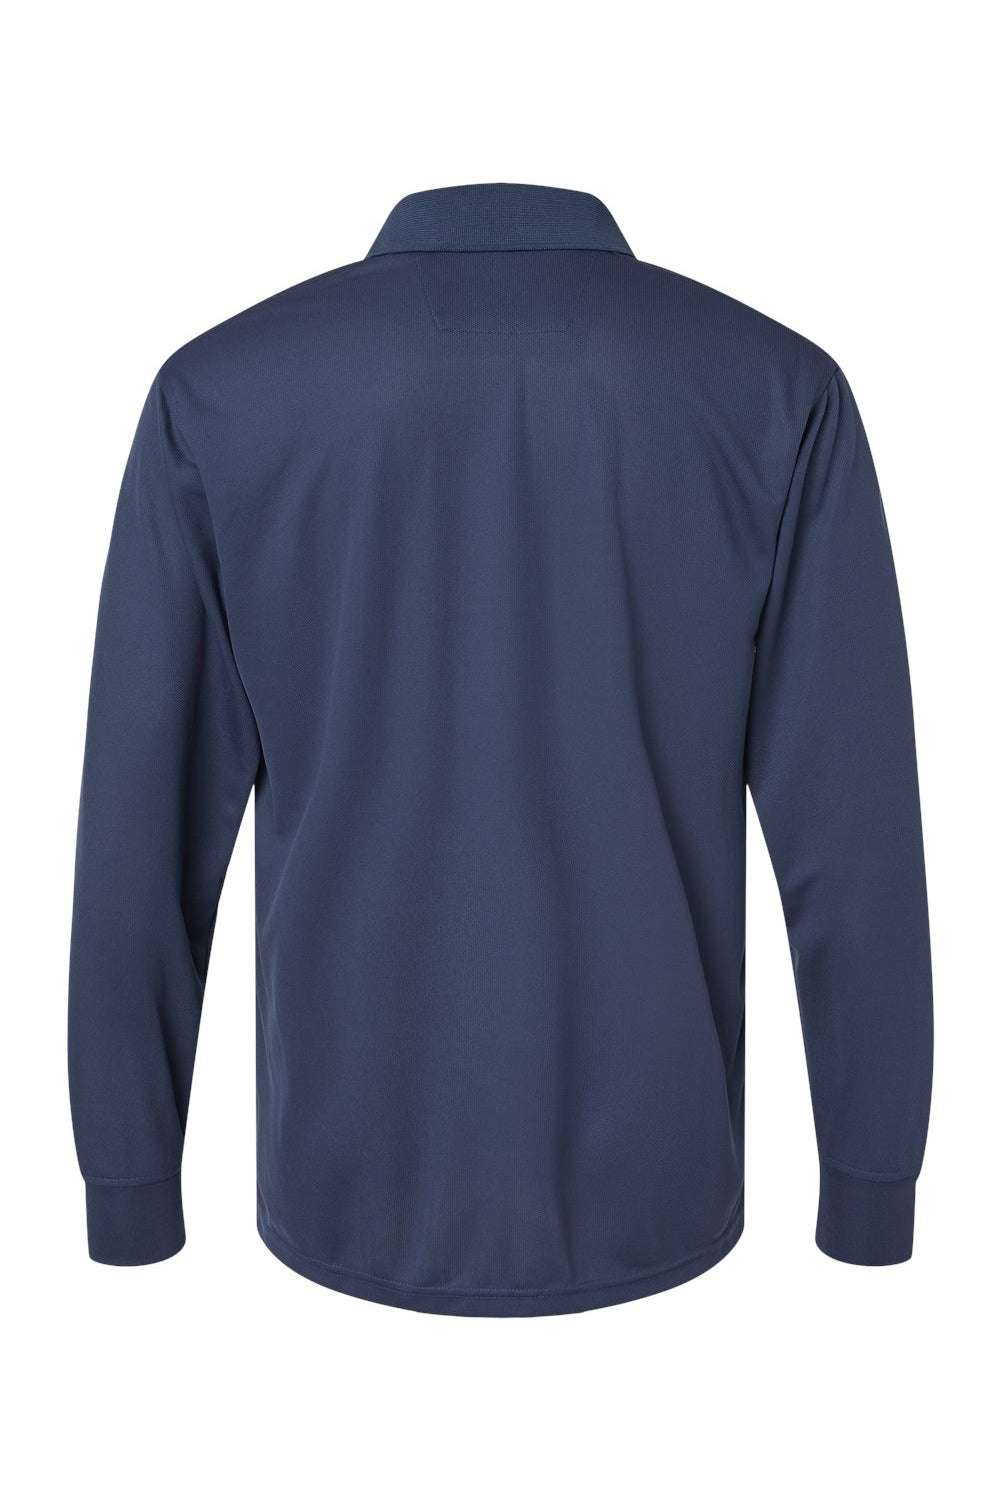 Paragon 110 Mens Prescott Long Sleeve Polo Shirt Navy Blue Flat Back